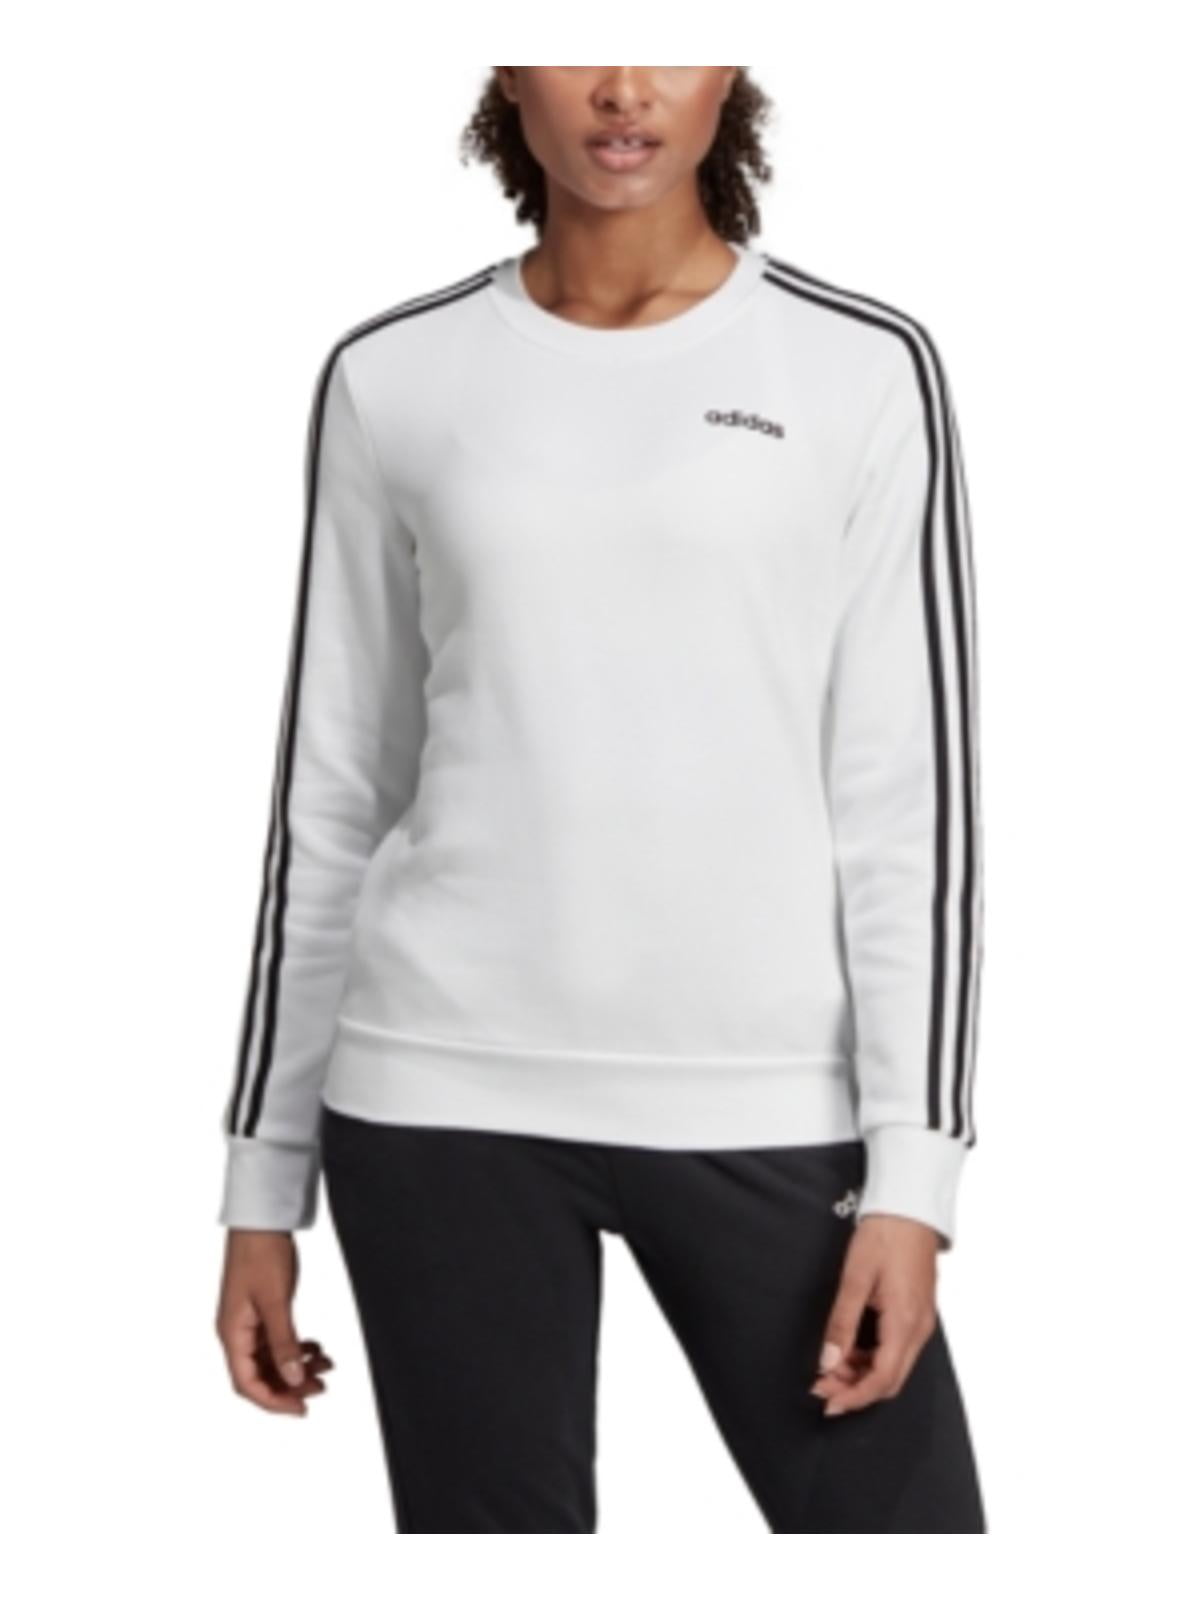 Adidas Womens Workout Fitness Sweatshirt - Walmart.com